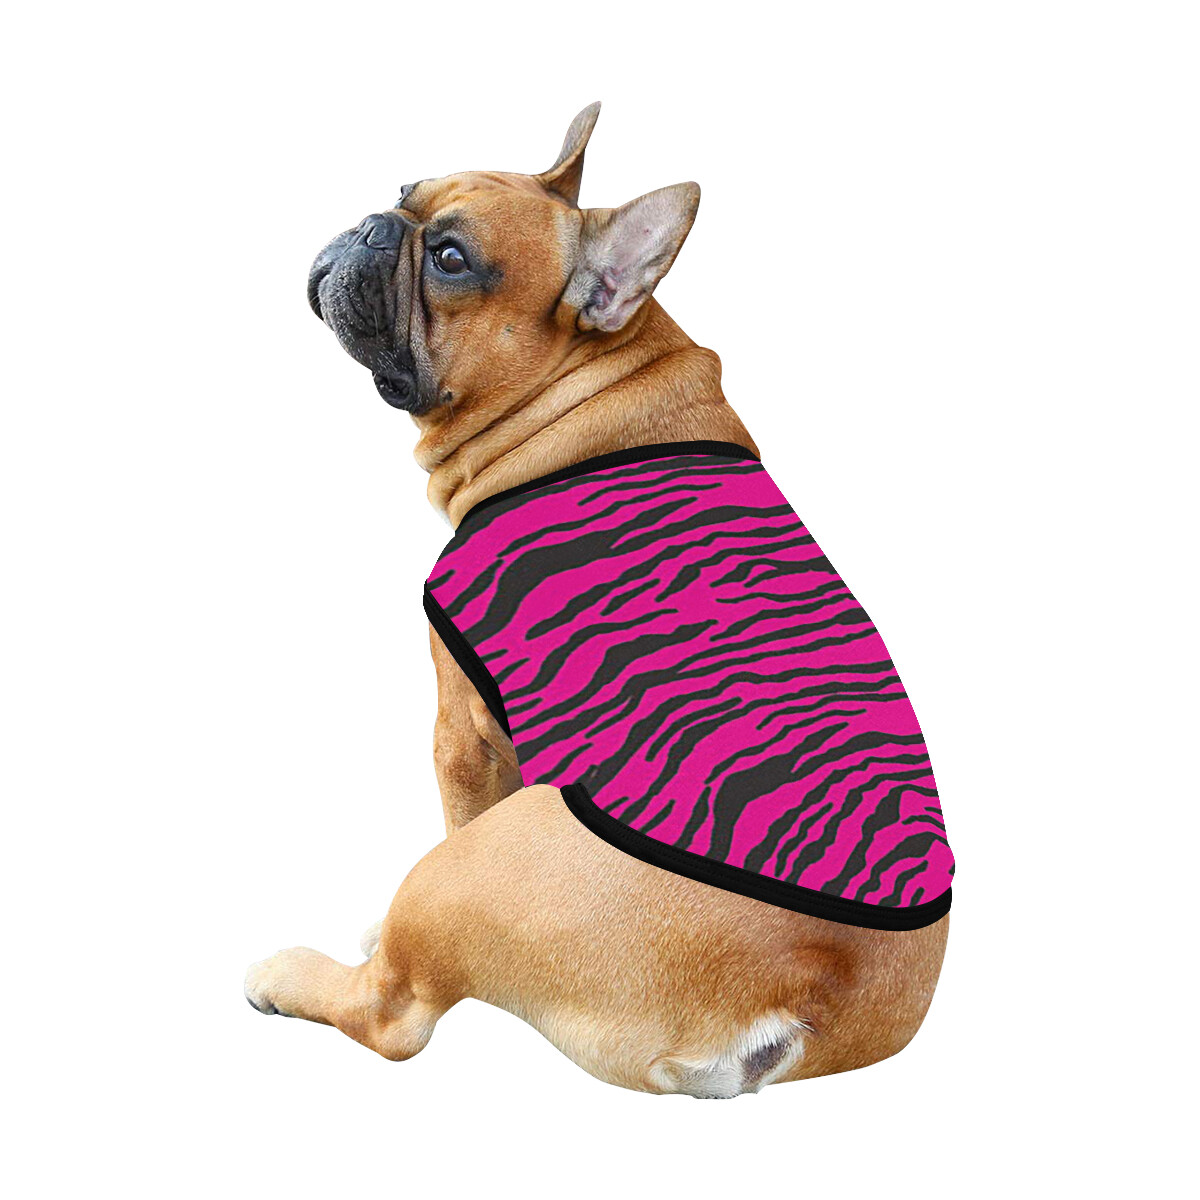 🐕 Animal print Zebra Dog Tank Top, Dog shirt, Dog clothes, Gifts, front back print, 7 sizes XS to 3XL, dog t-shirt, dog gift, black & hot pink